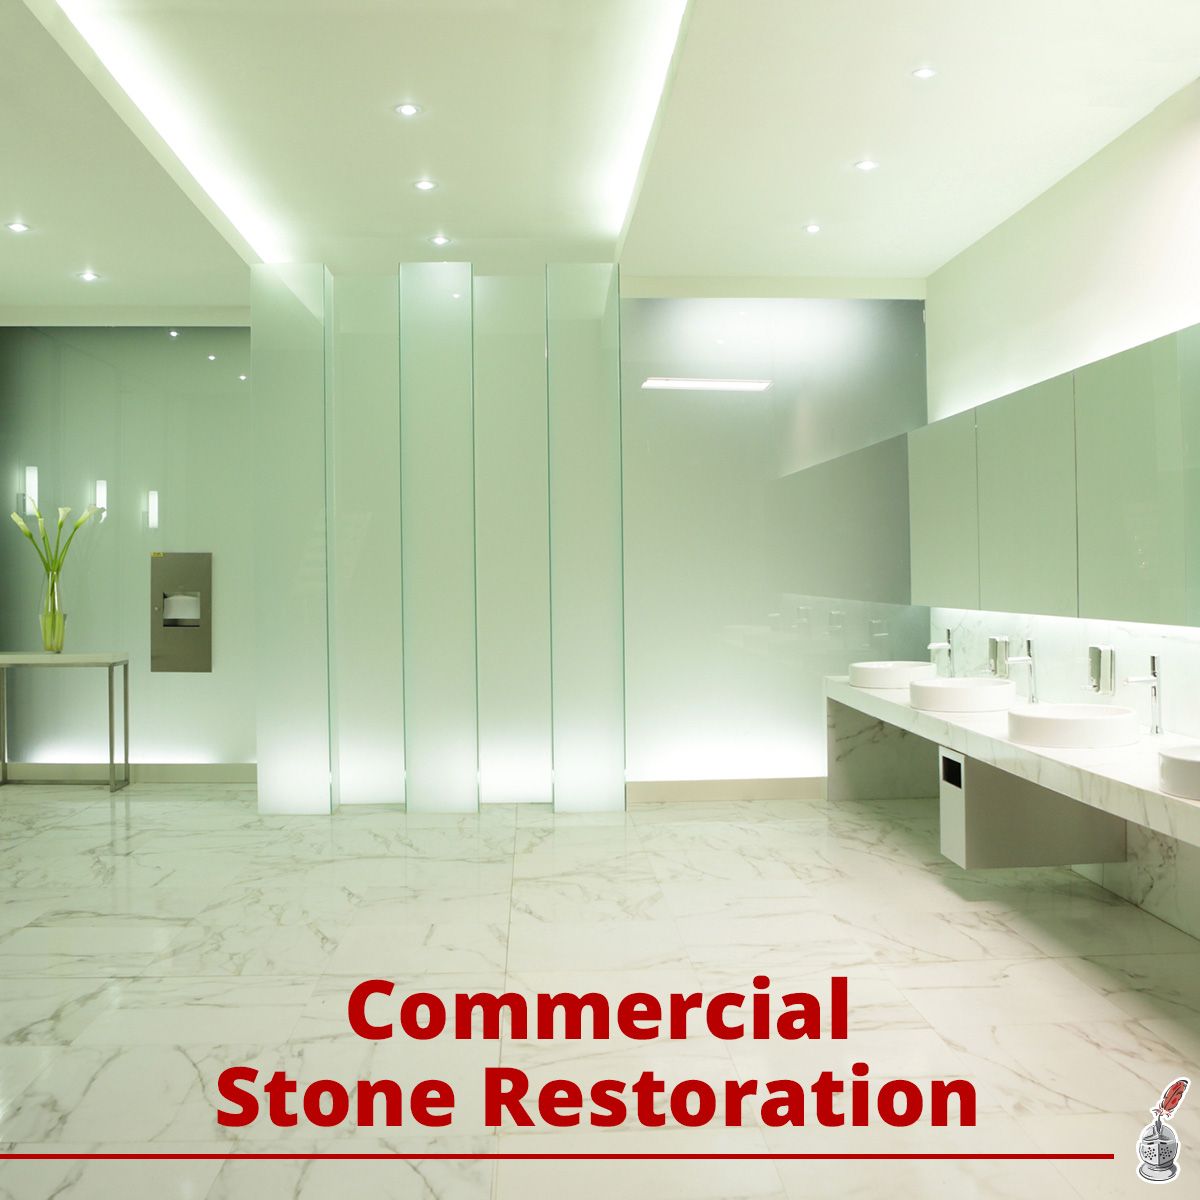 Commercial Stone Restoration